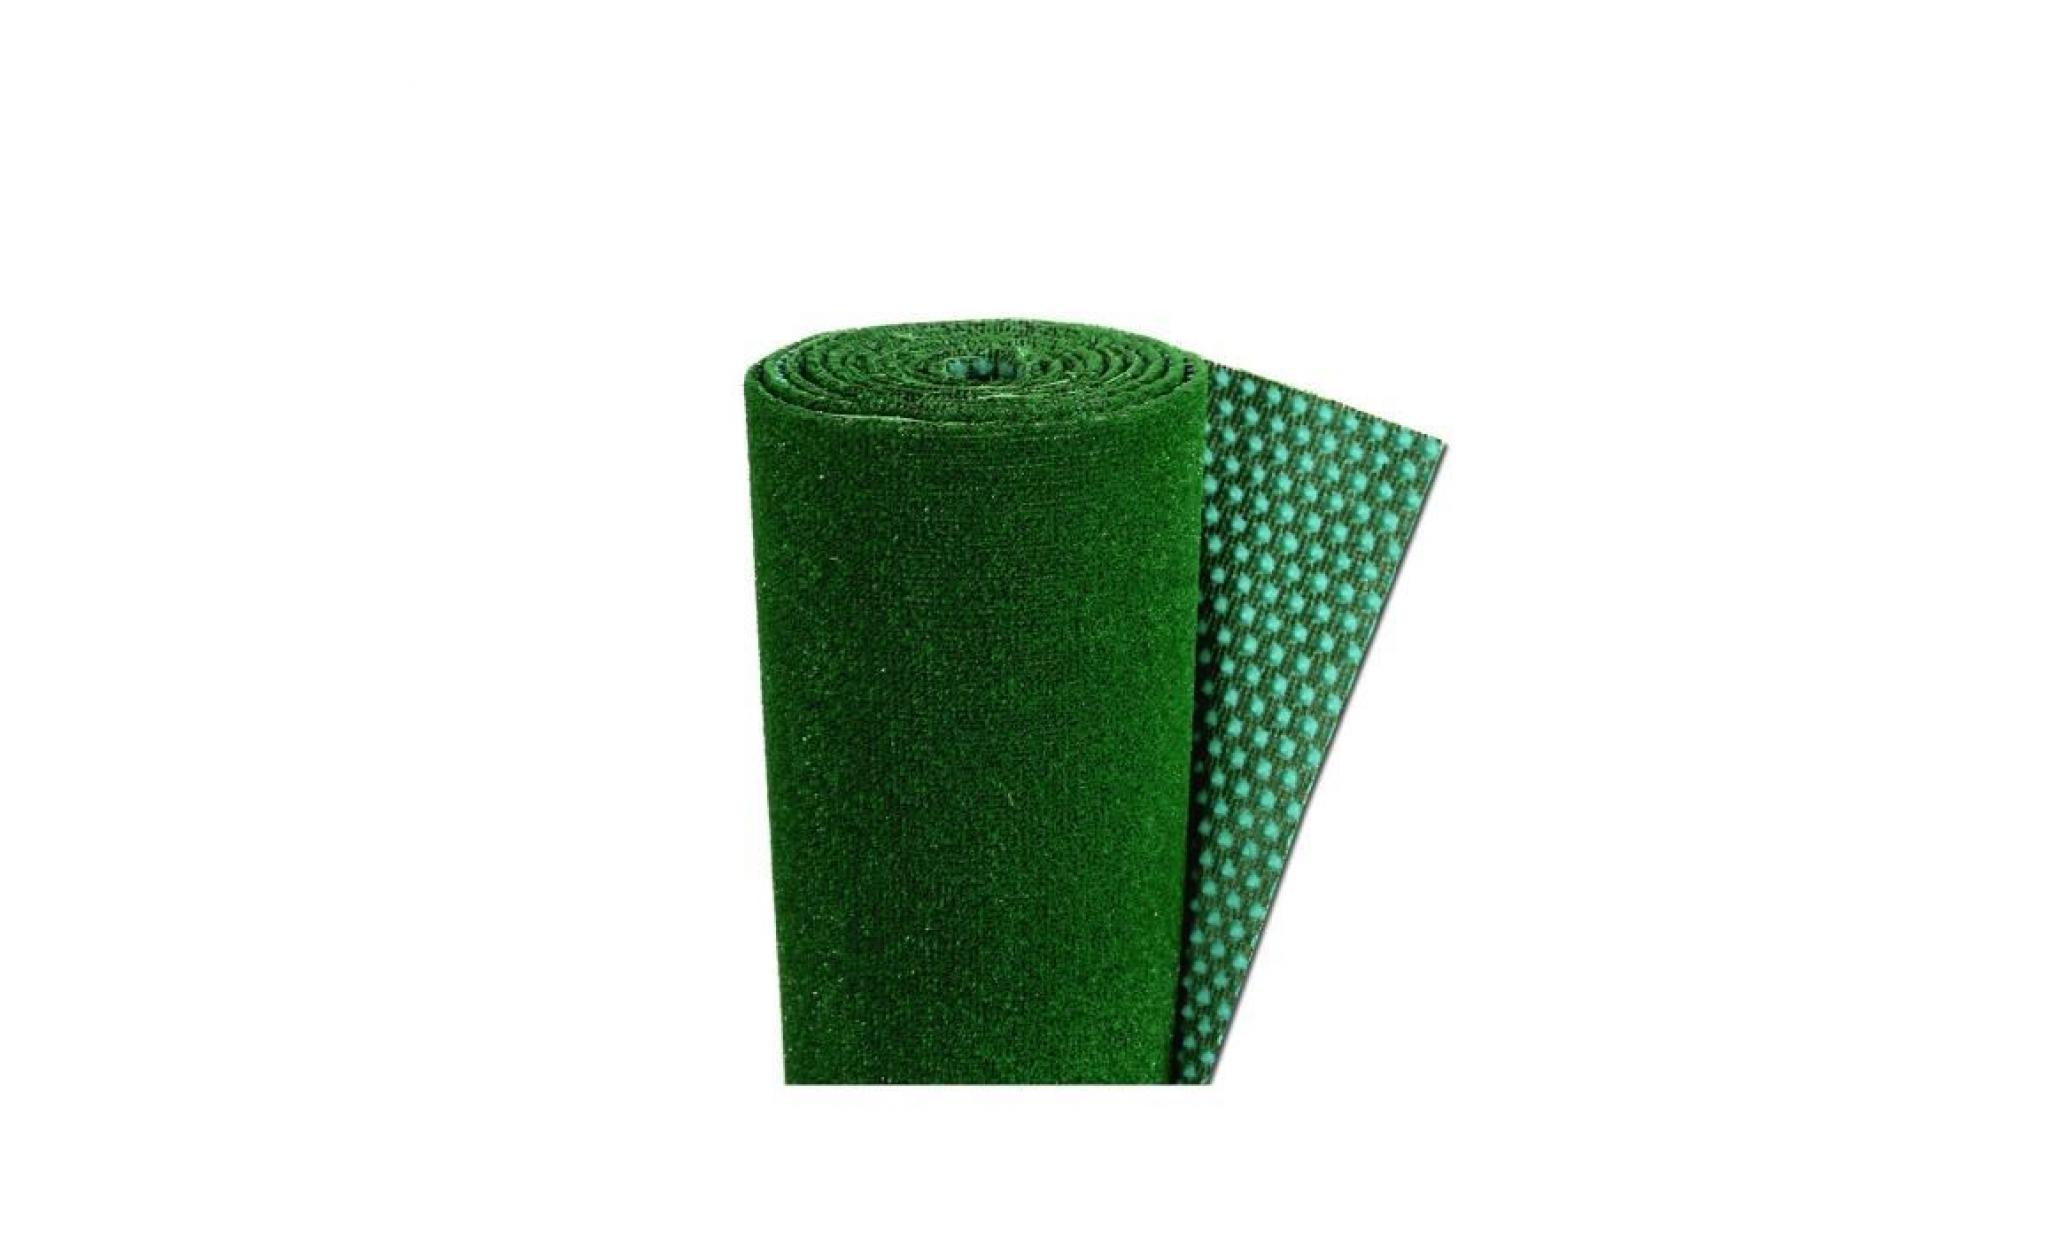 york   tapis type gazon artificiel avec nubs – pour jardin, terrasse, balcon   vert   [400x150 cm] pas cher